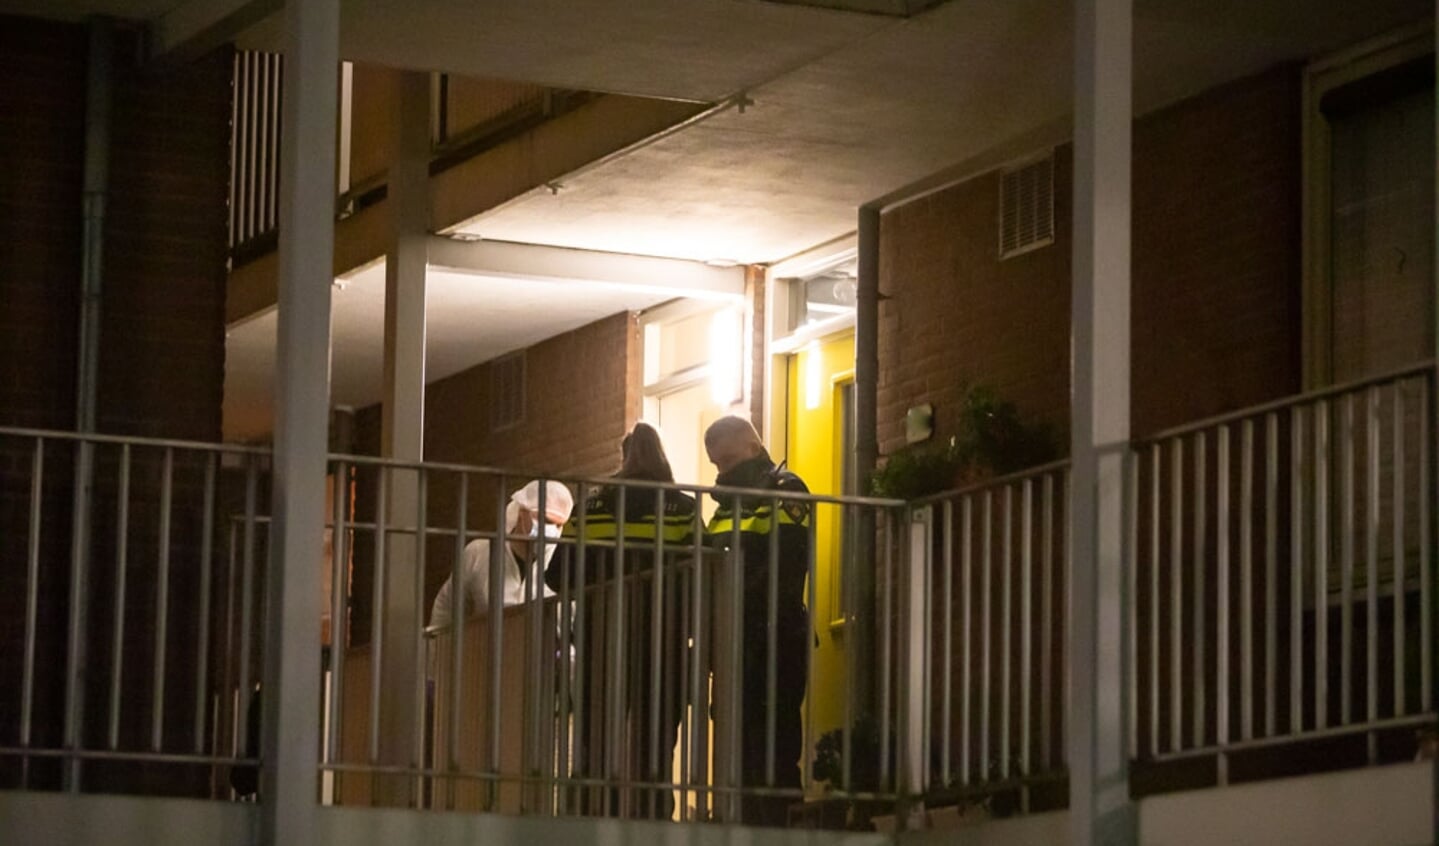 Nachtelijk forensisch onderzoek in woning in Baarn.
